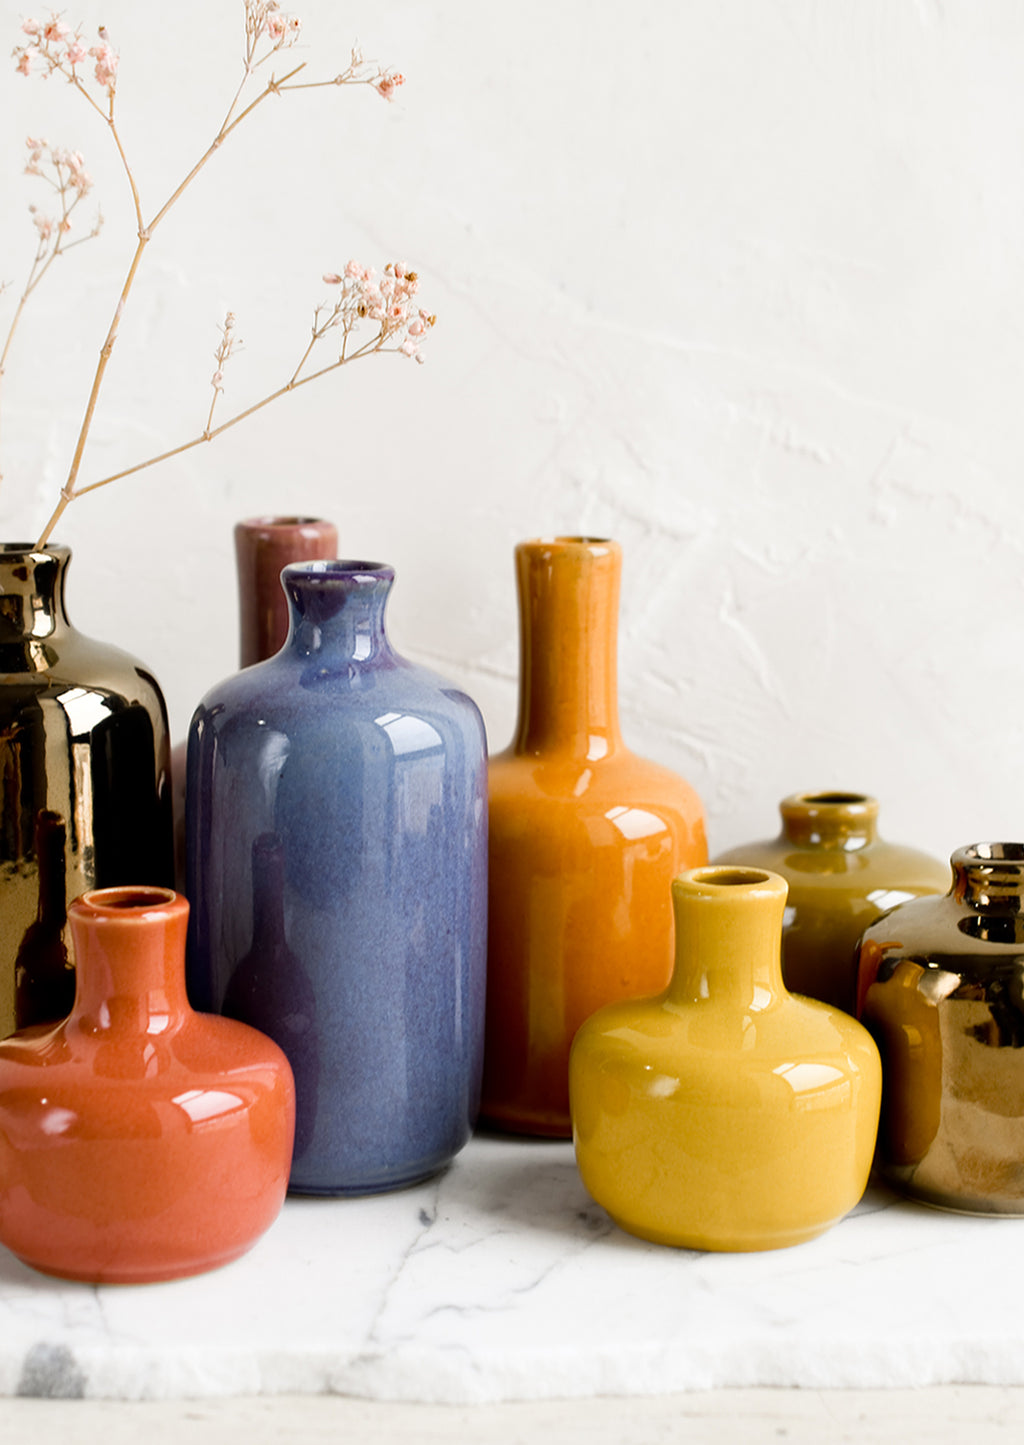 2: Ceramic bud vases in assorted glaze colors.